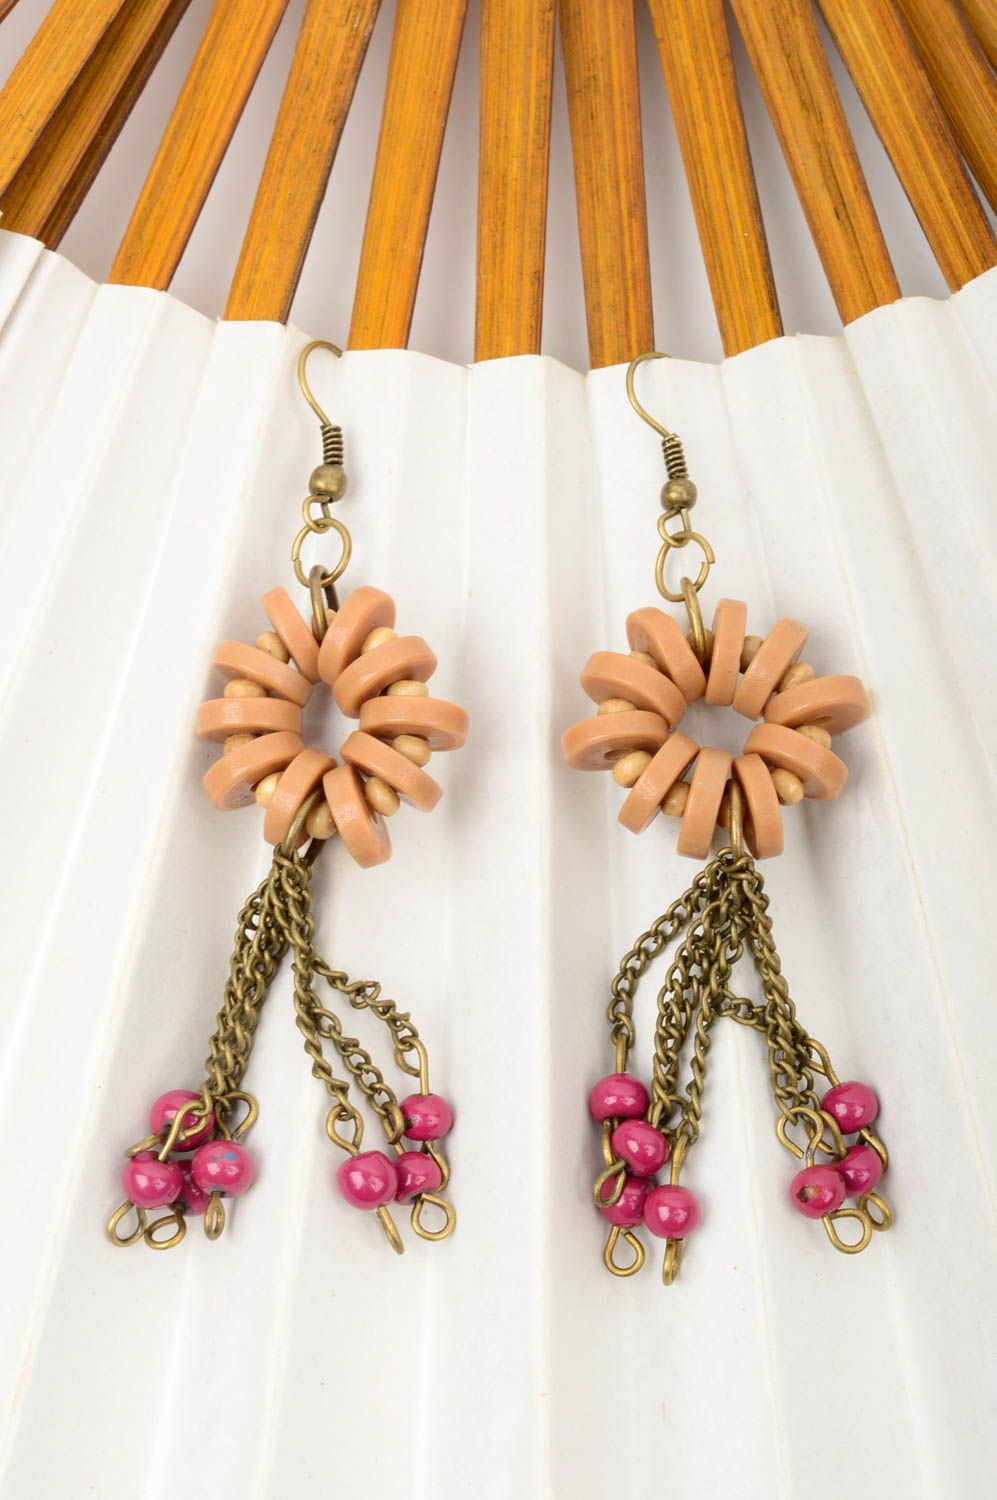 Handmade earrings designer jewelry unusual earrings for girls gift ideas photo 1